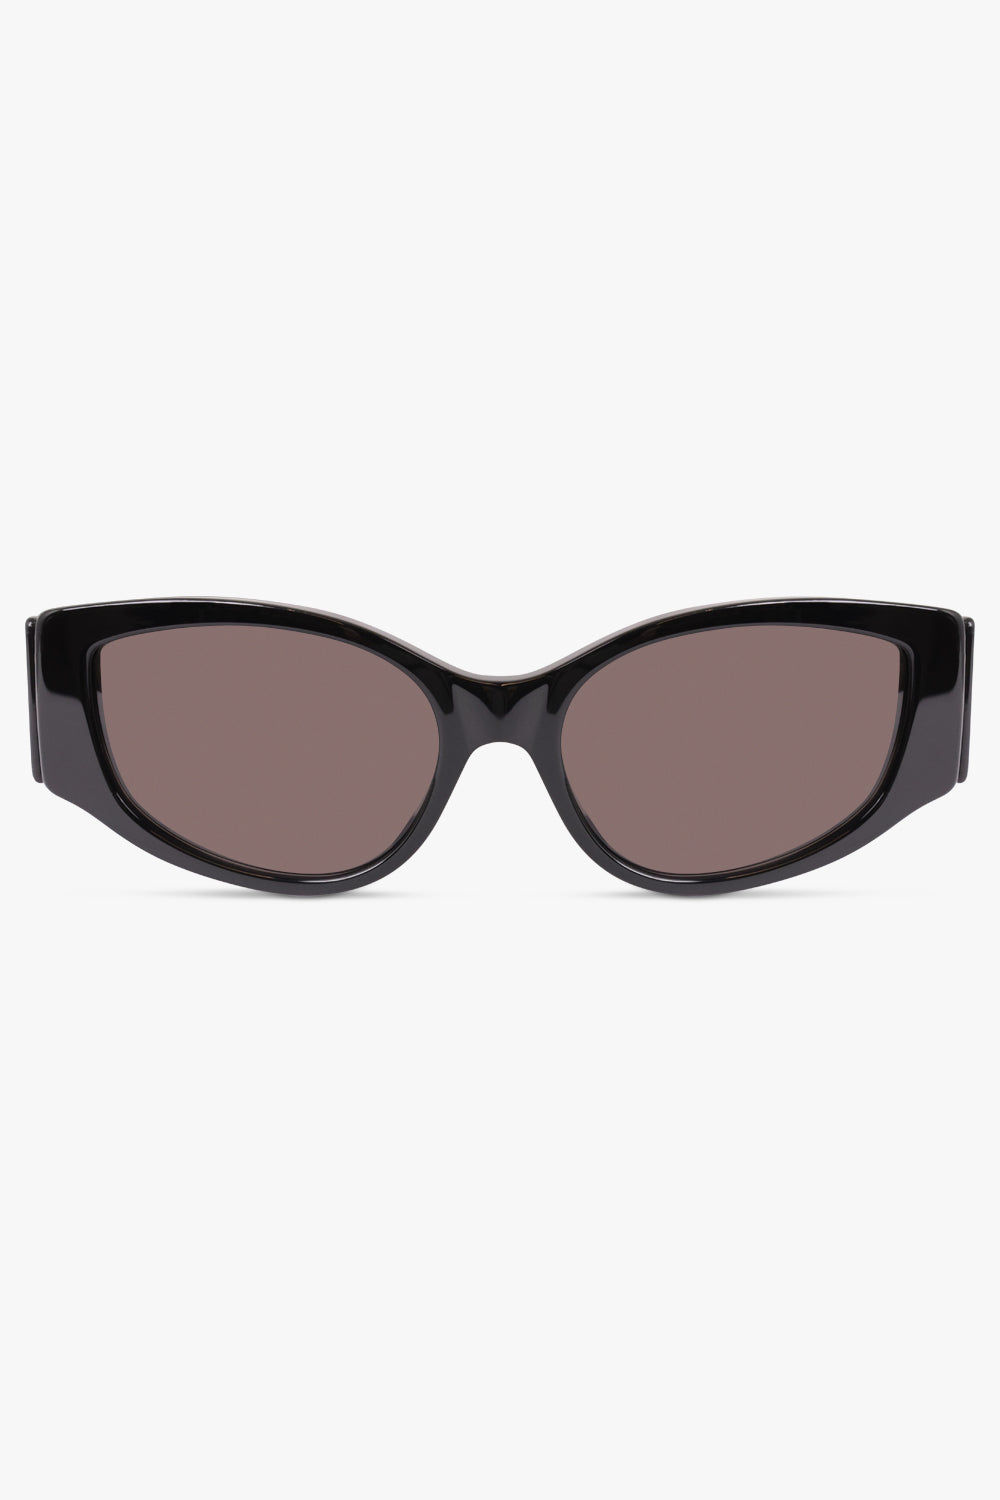 BALENCIAGA ACCESSORIES BLACK / BLACK BB0258S 58 Cat Eye Sunglasses | Black